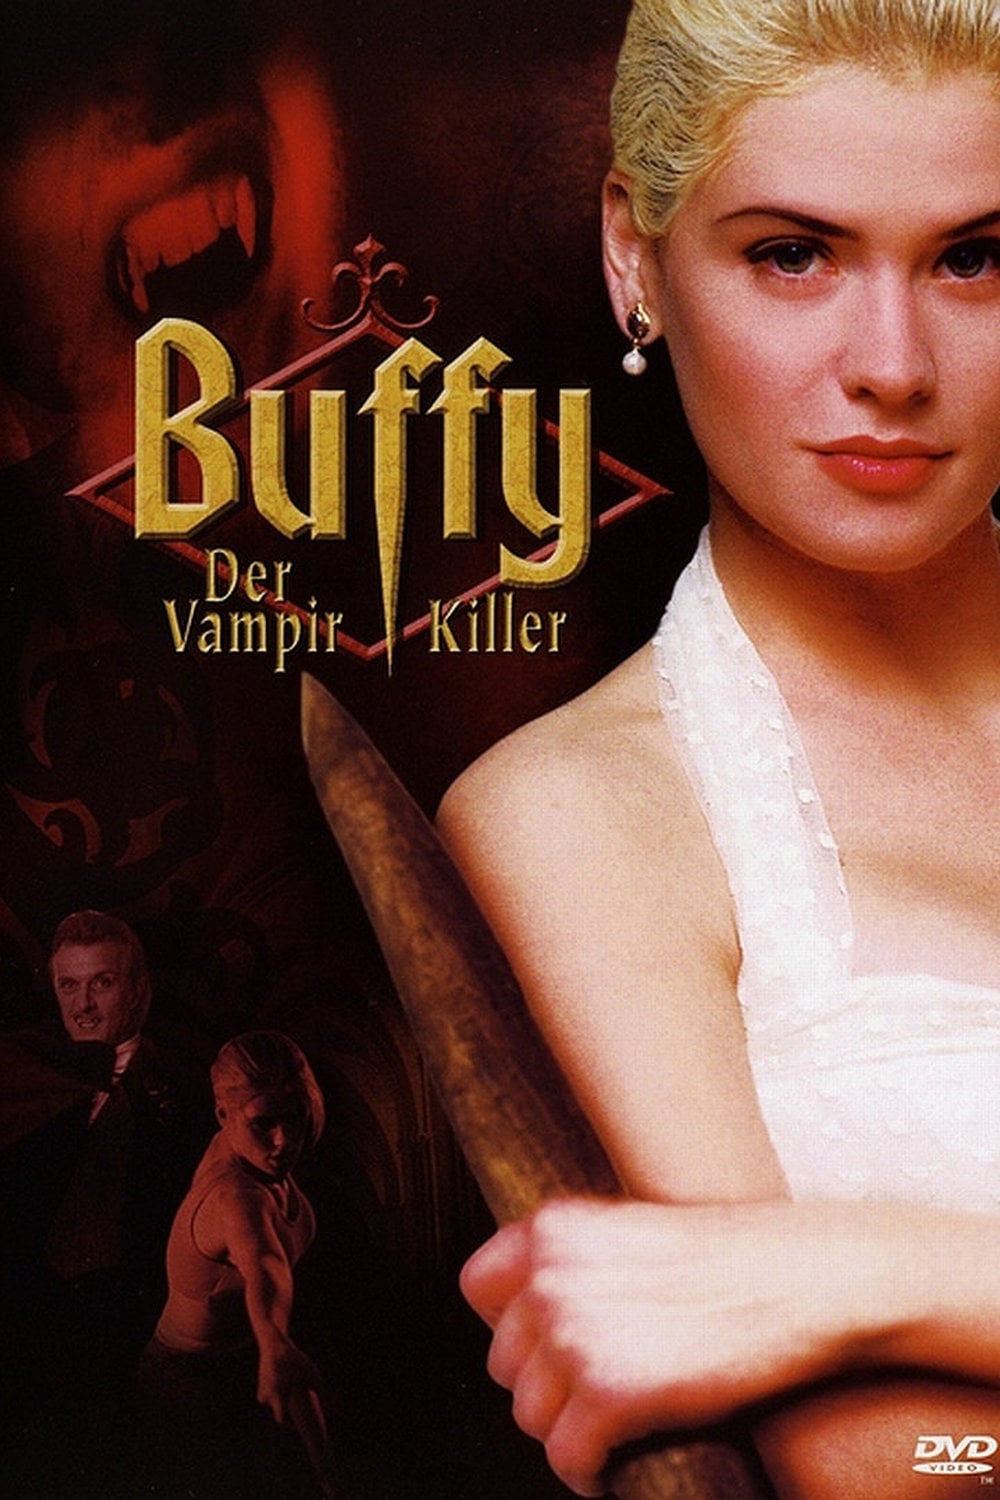 Plakat von "Buffy - Der Vampir Killer"